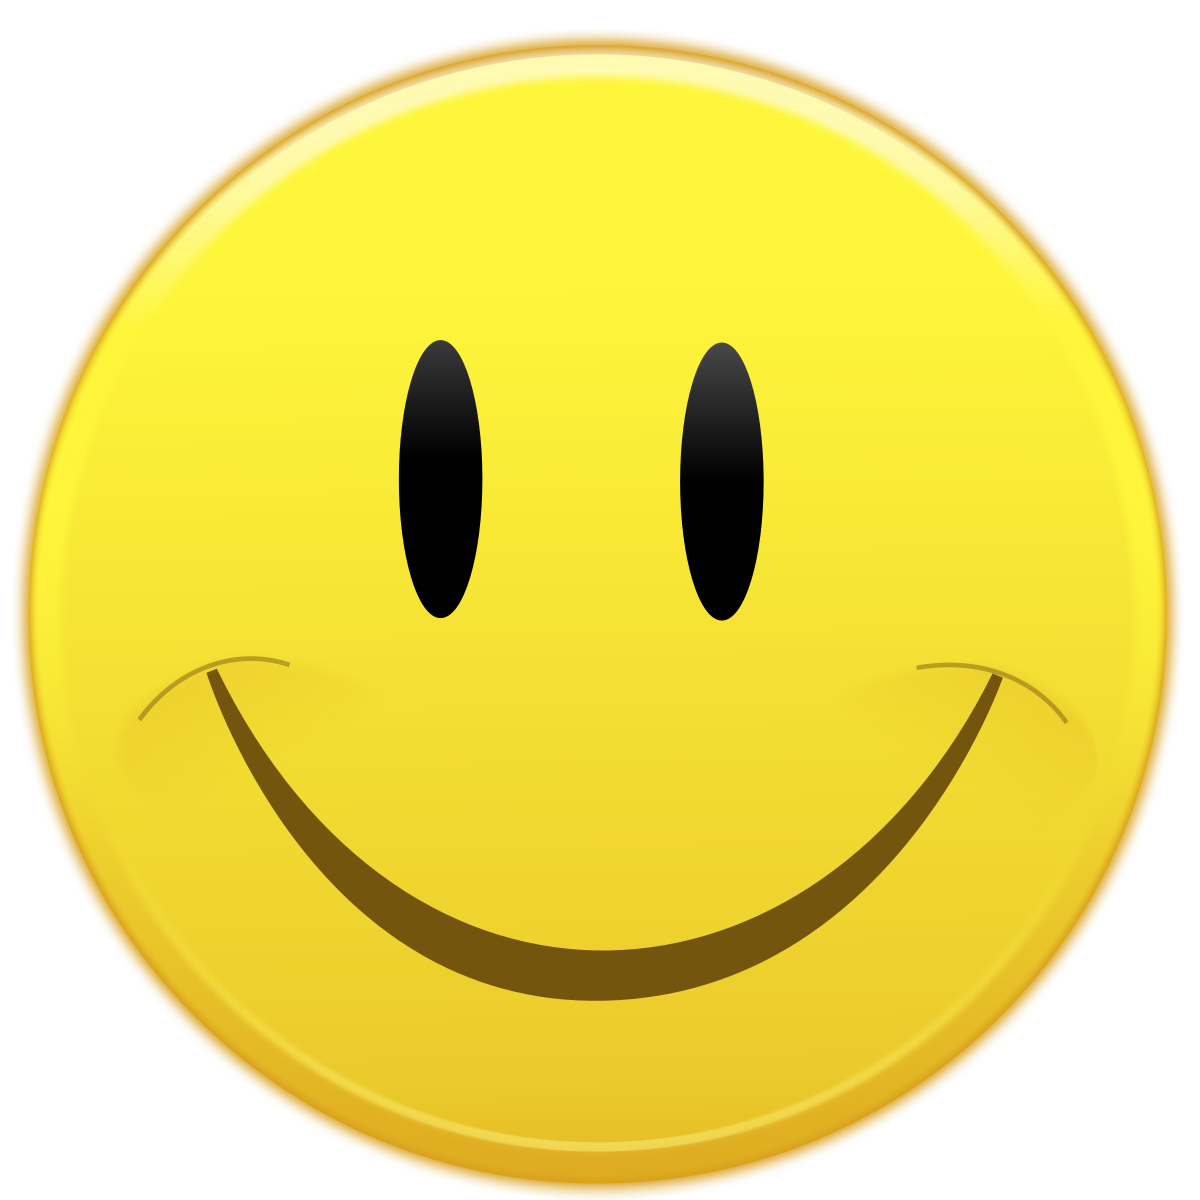 Smiling emoji icon